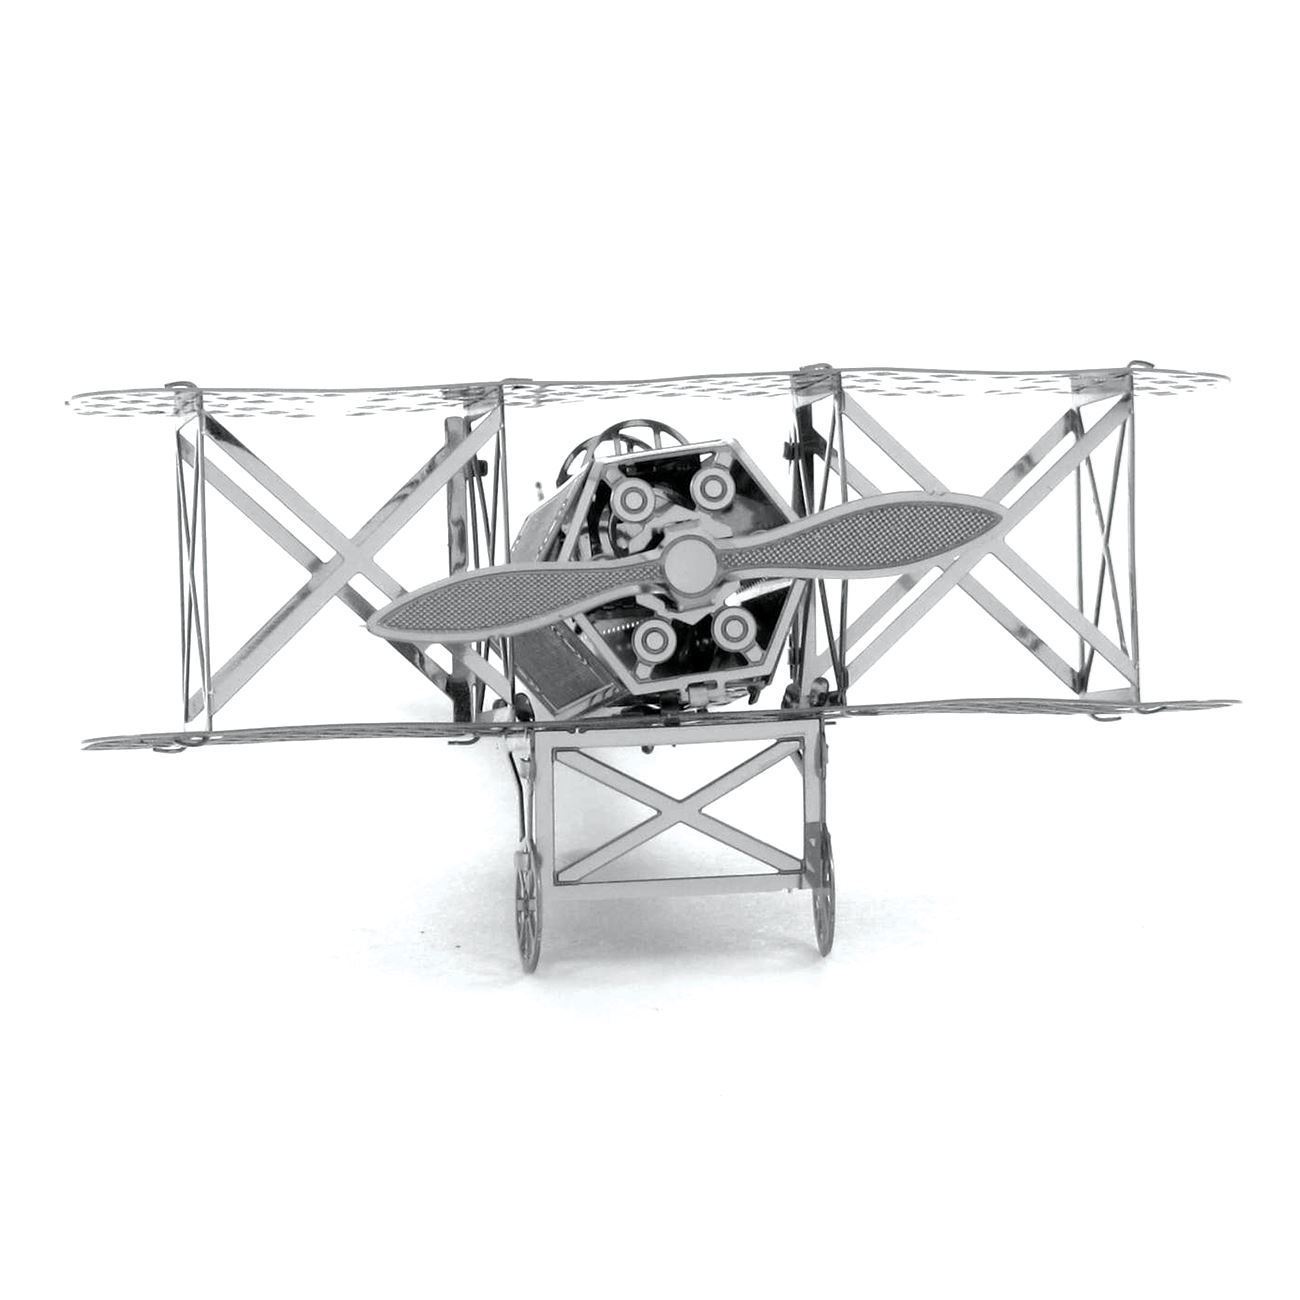 3D Metal Earth Model Kit Assembly New! Fokker D-VII Plane Biplane 